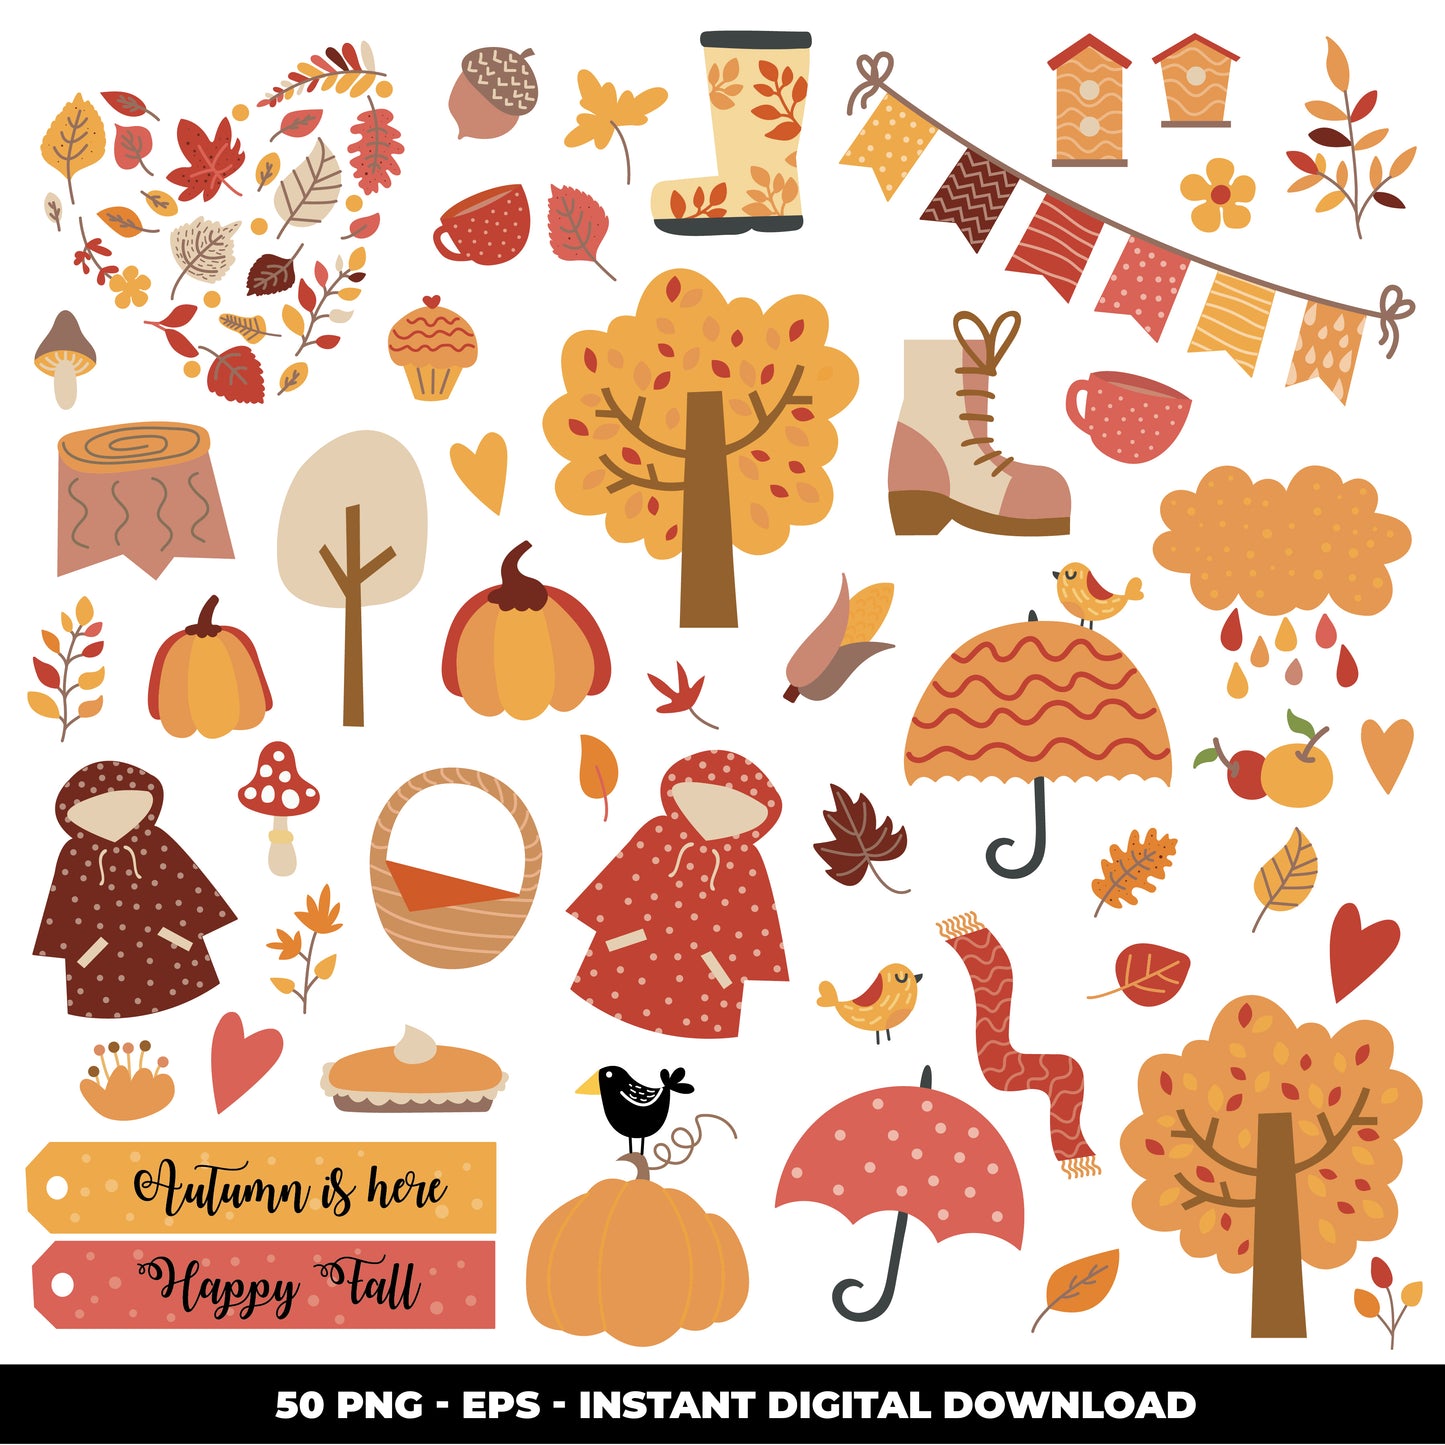 COD847 - Autumn clipart, fall clipart, Leaves clipart, Plants eps, Paper Leaves, Leaf Templates, Wreath